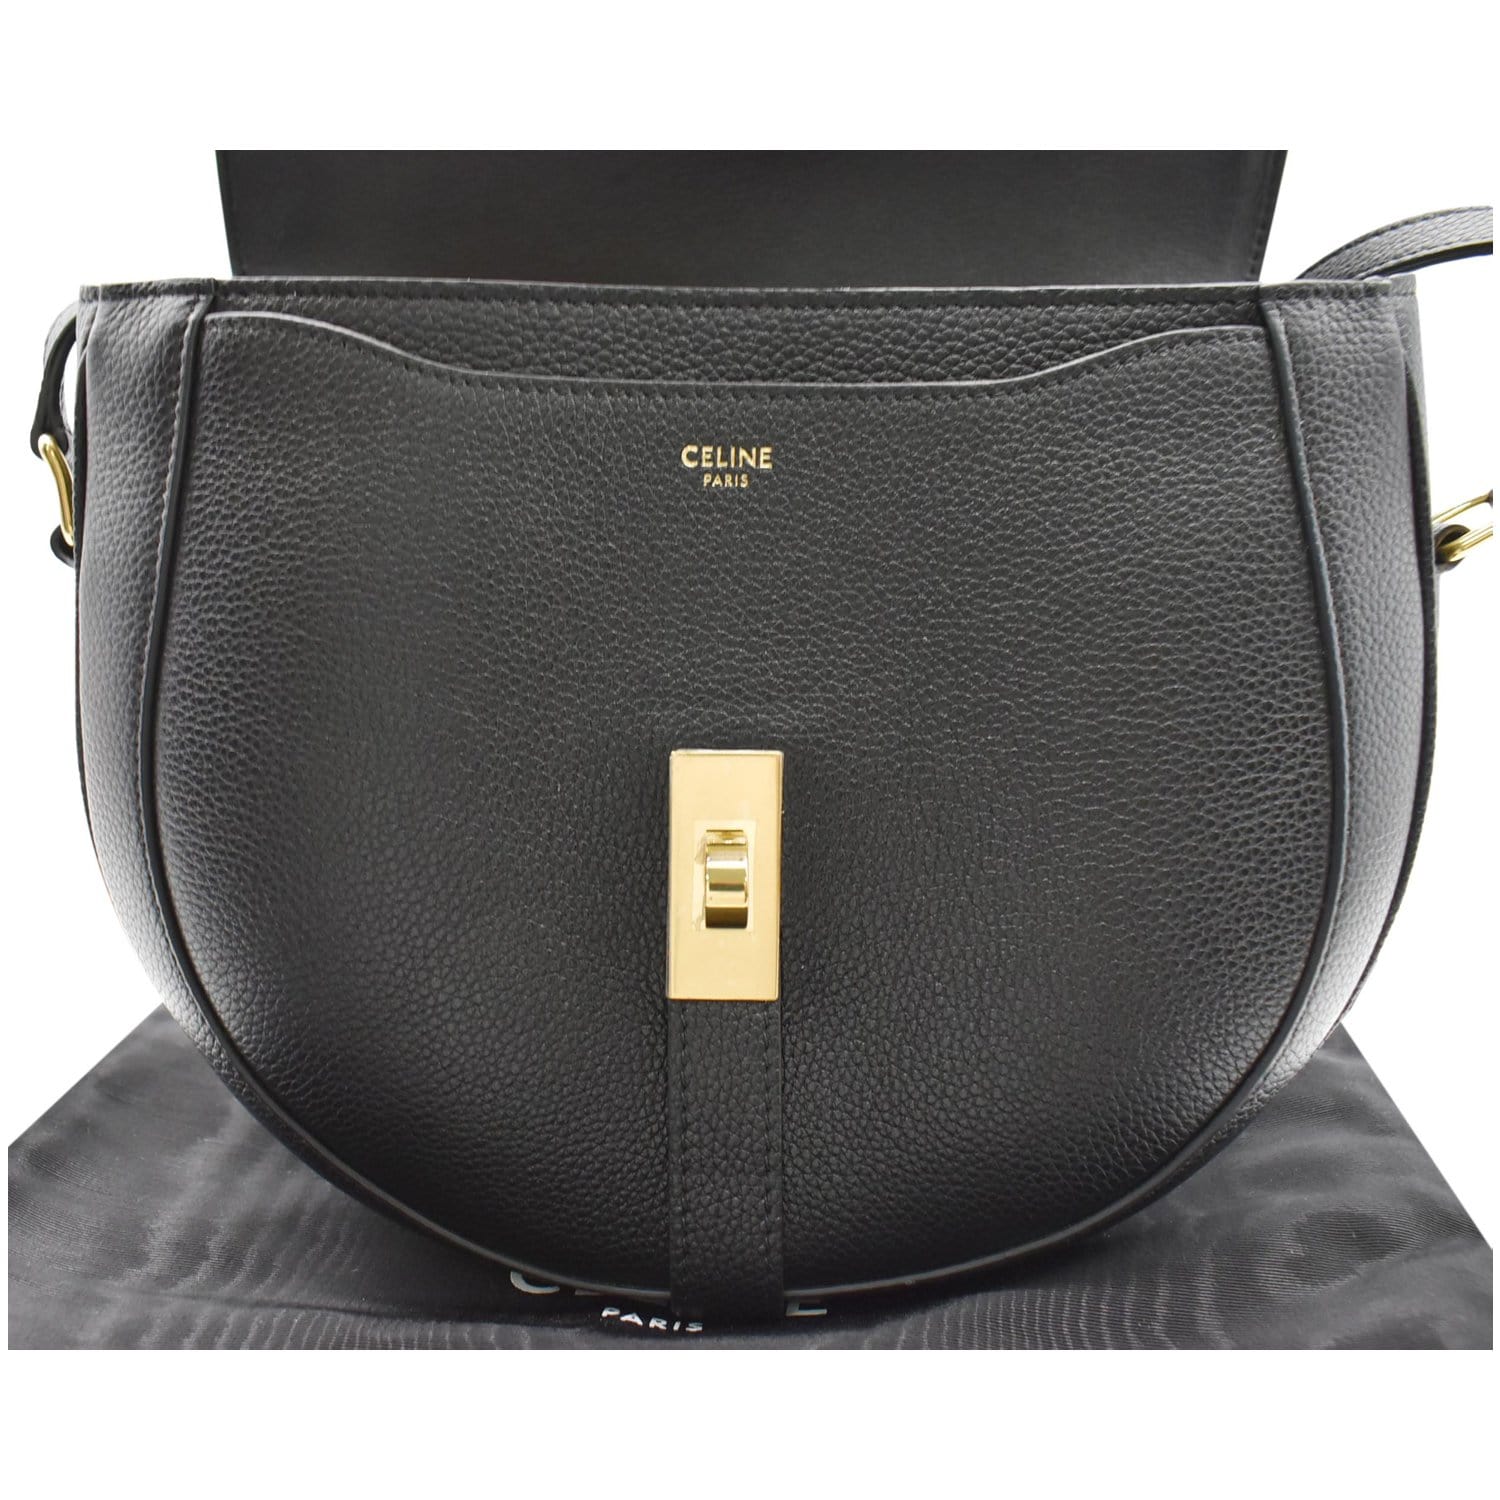 FWRD Renew Celine Small 16 Besace Shoulder Bag in Black